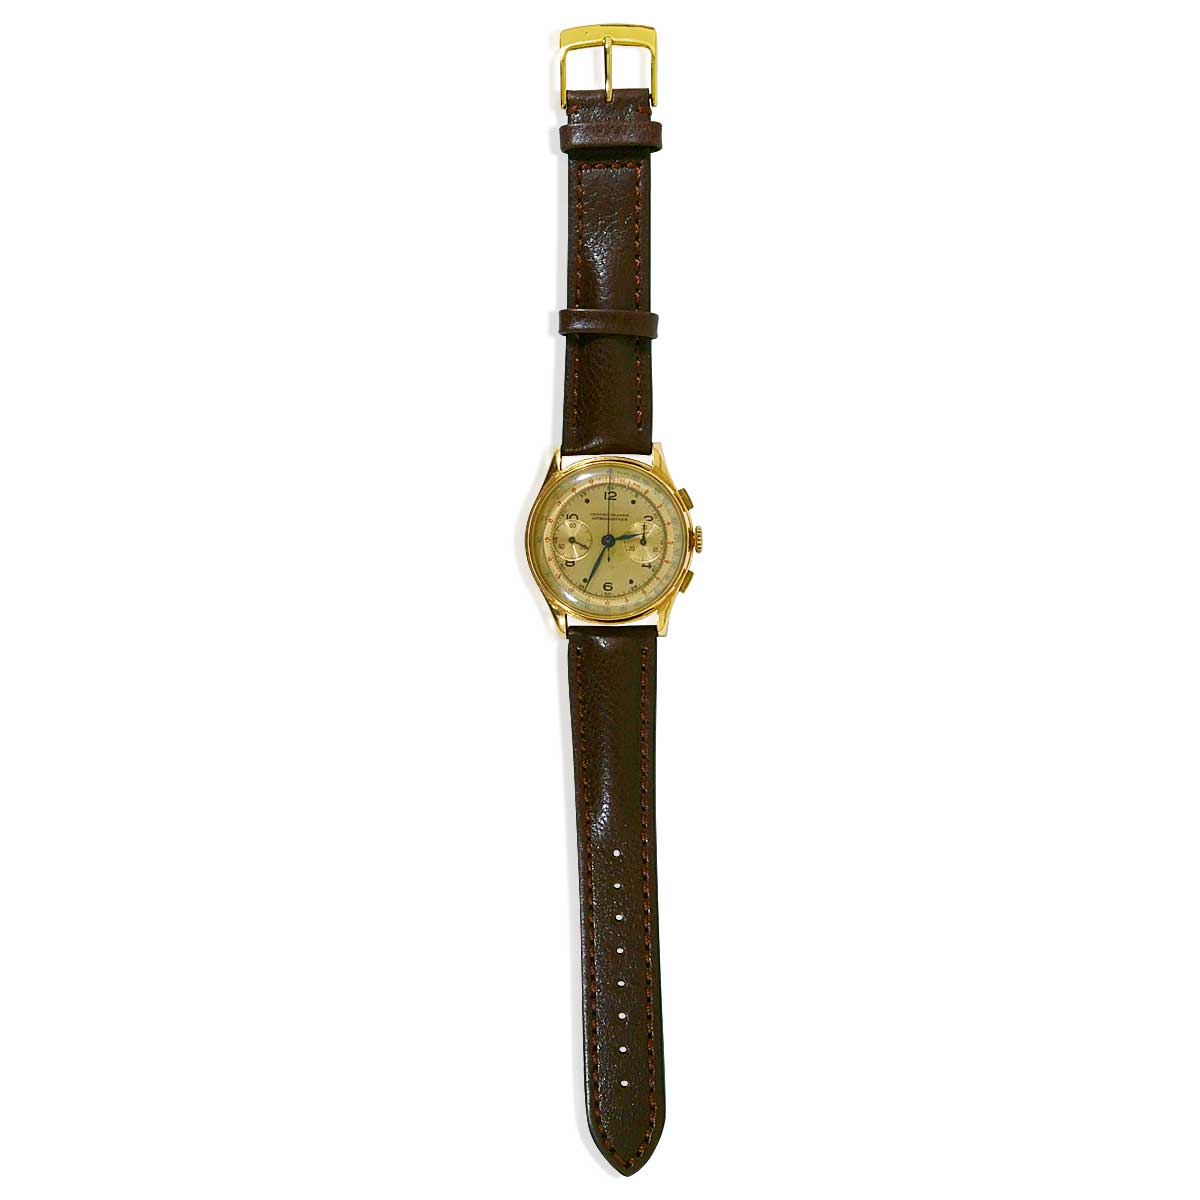 Chronograph Goldene Herrenarmbanduhr, 18 Karat Gelbgold mit goldenem Ziffernblatt, Stoppuhr und Lederamband